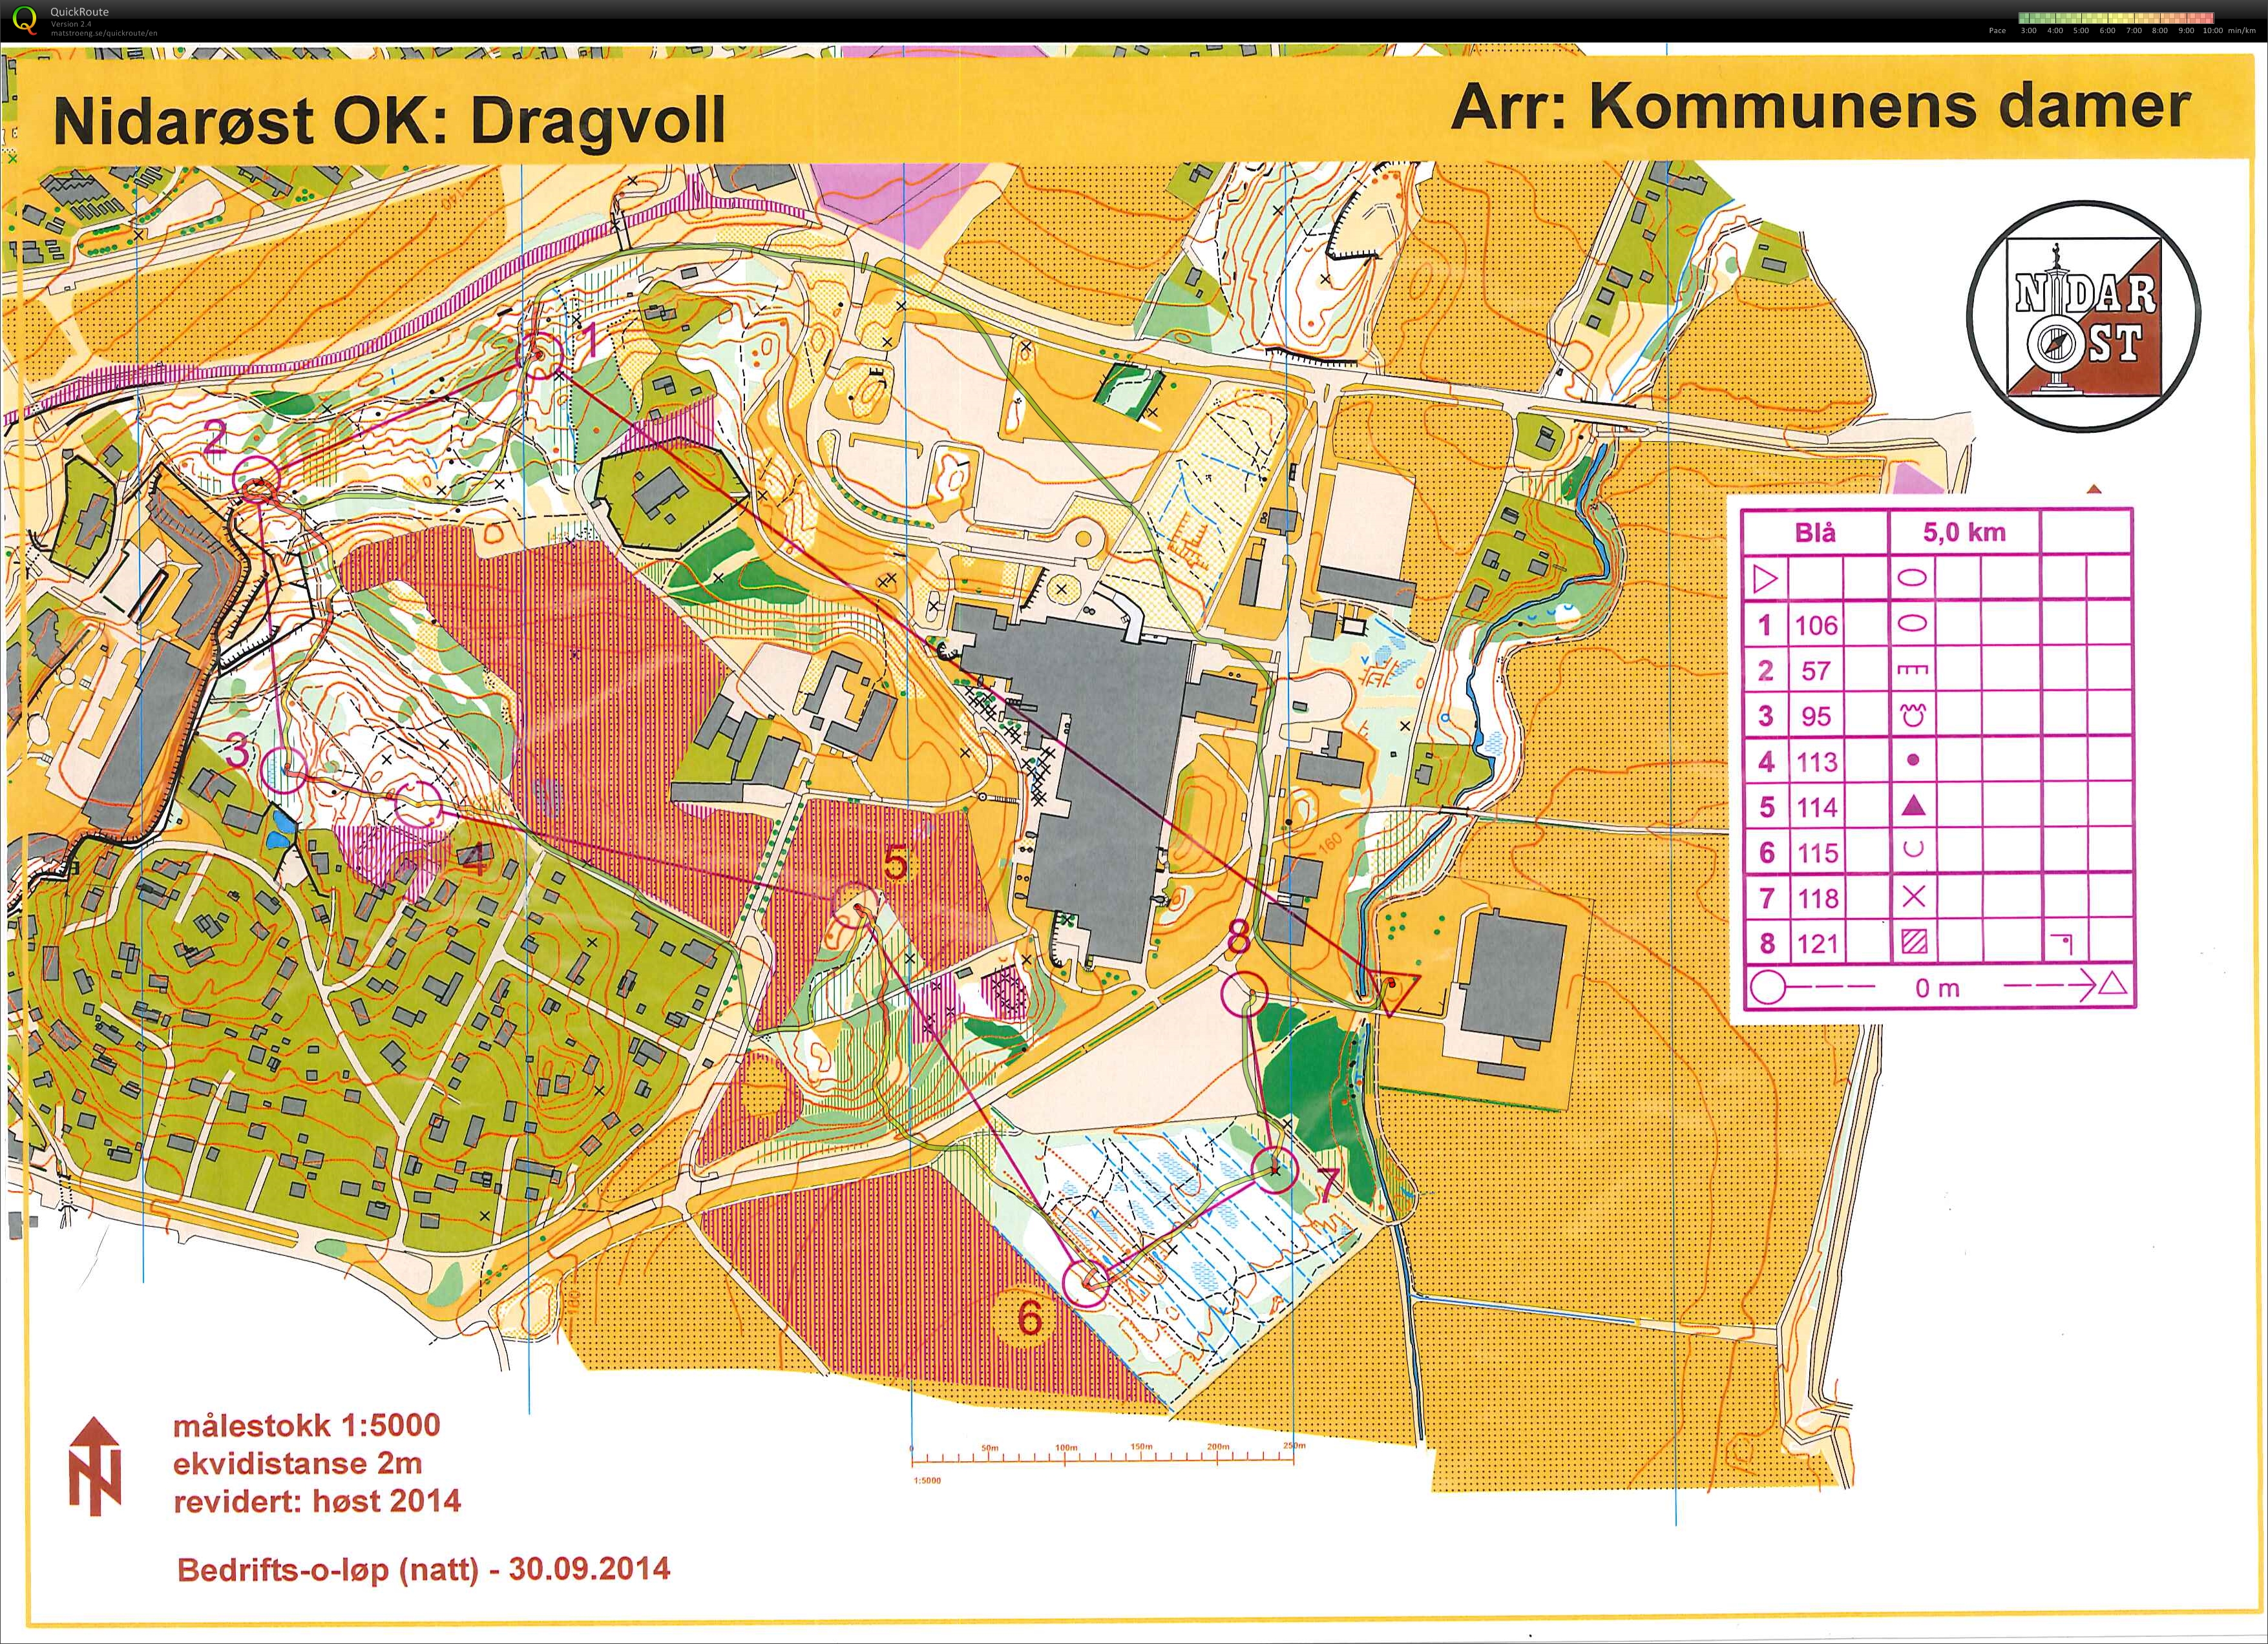 Bedrifts o-løp natt Dragvoll, del 1 (30-09-2014)